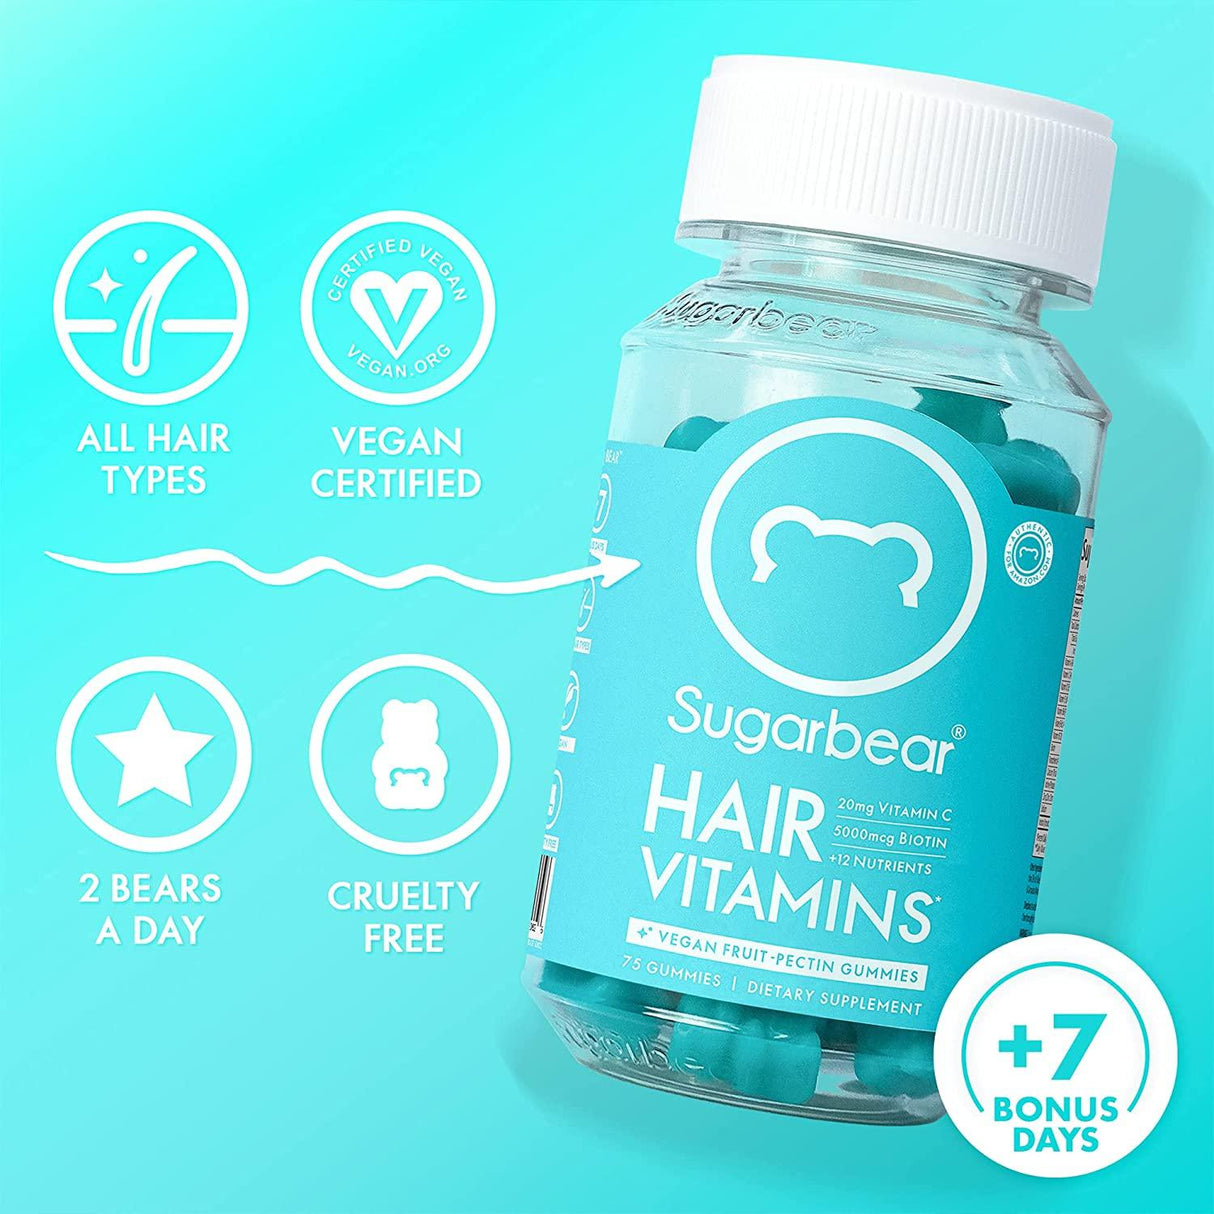 Sugarbear Vegan Hair Gummy Vitamins 60 Gomitas - The Red Vitamin MX